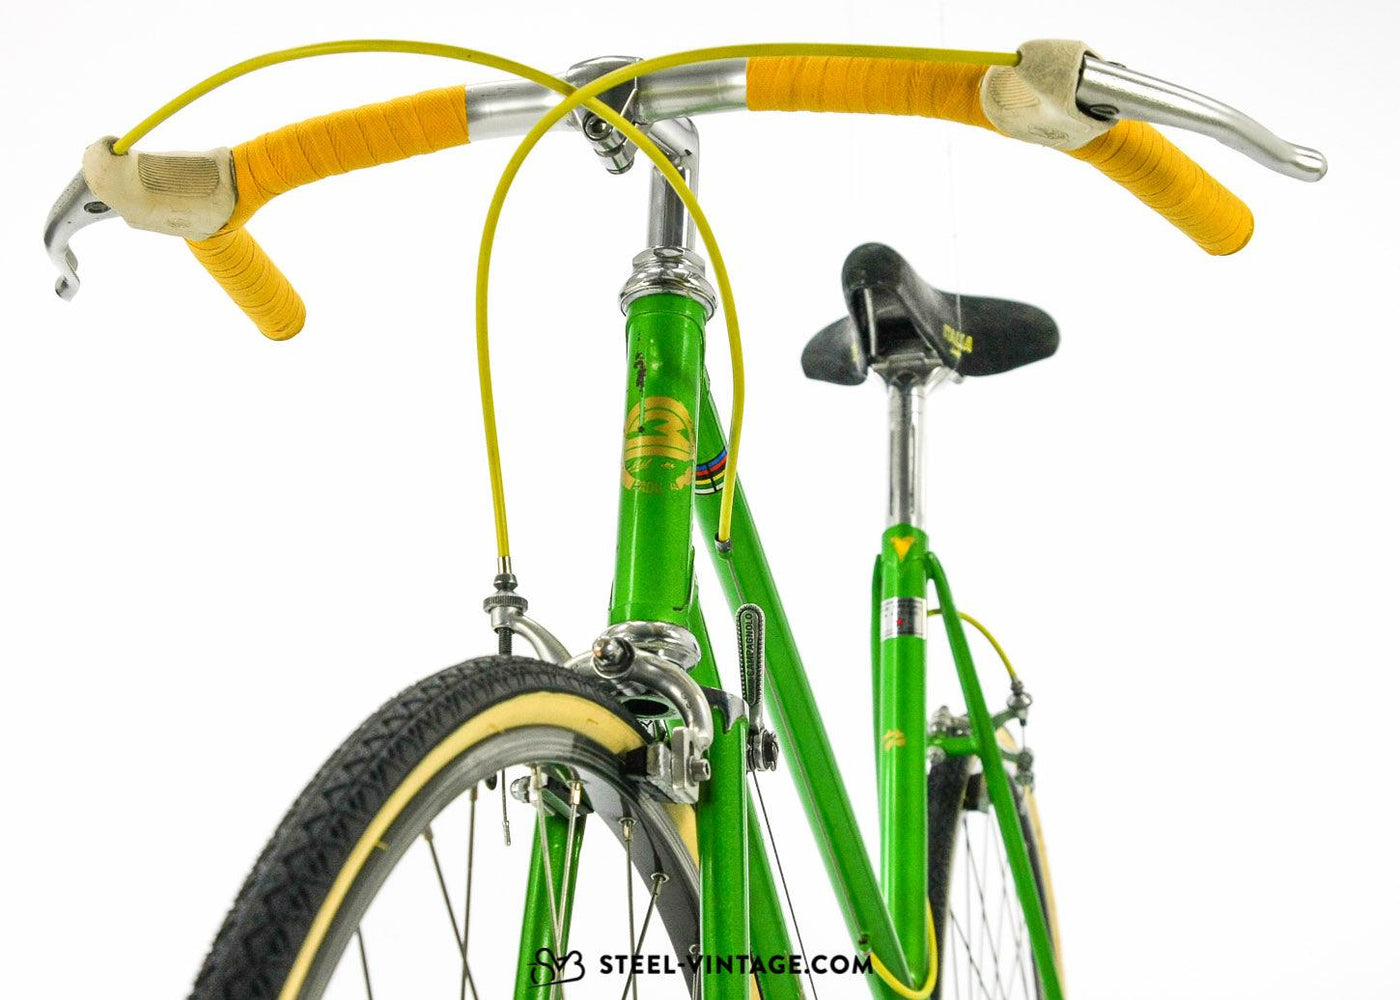 Milanetti Vintage Ladies Bike - Steel Vintage Bikes